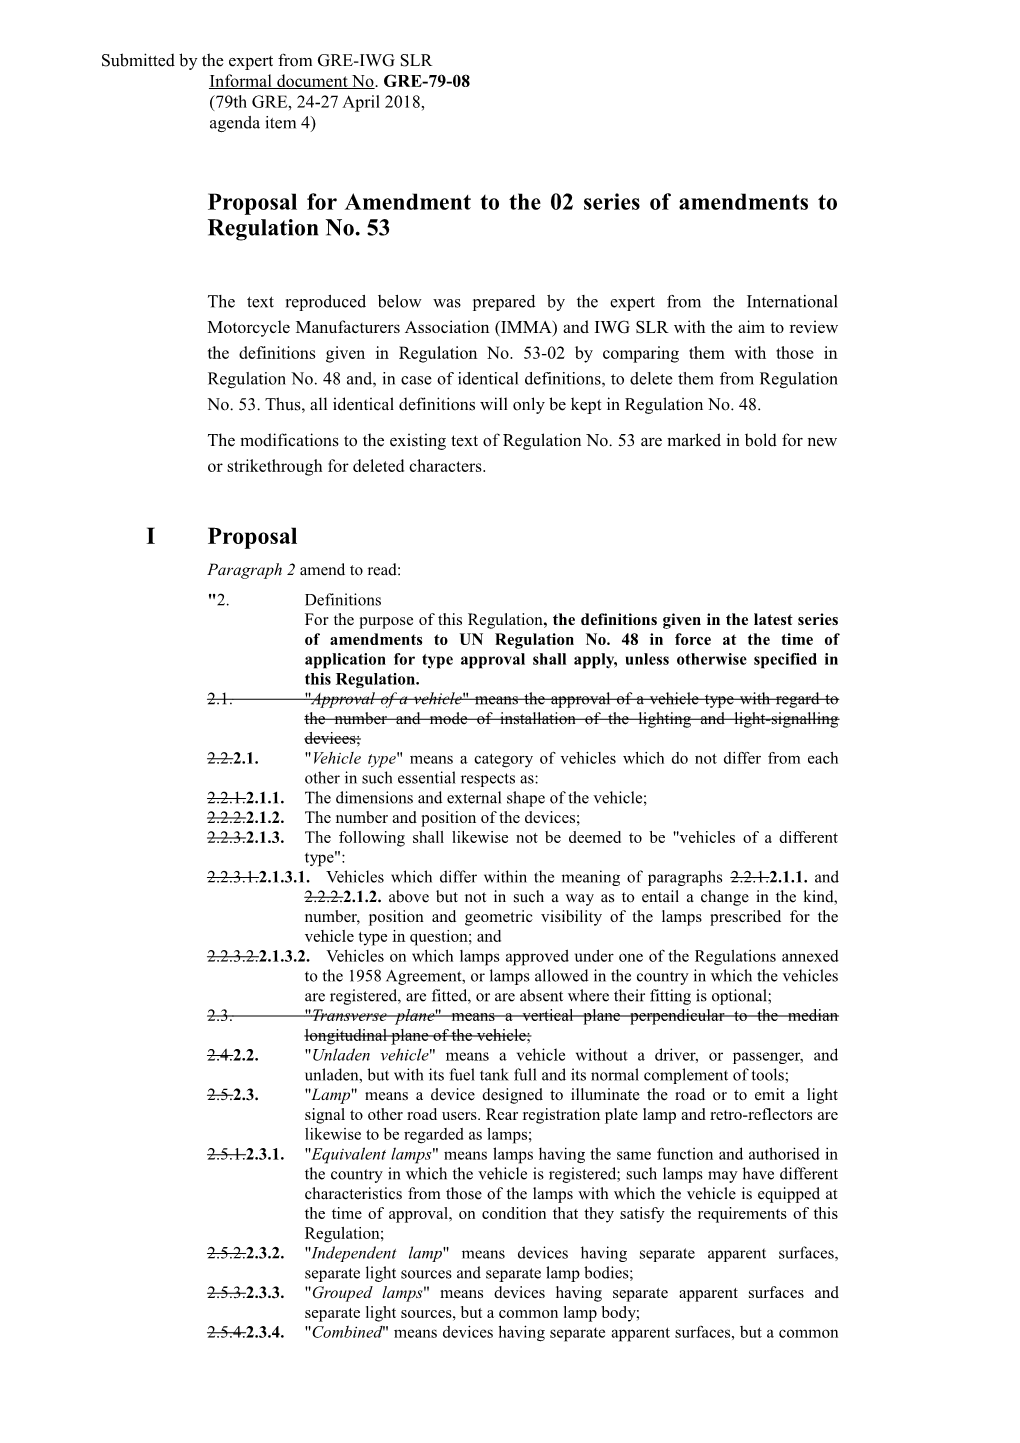 Proposal for Amendmentto the 02 Series of Amendments to Regulation No. 53